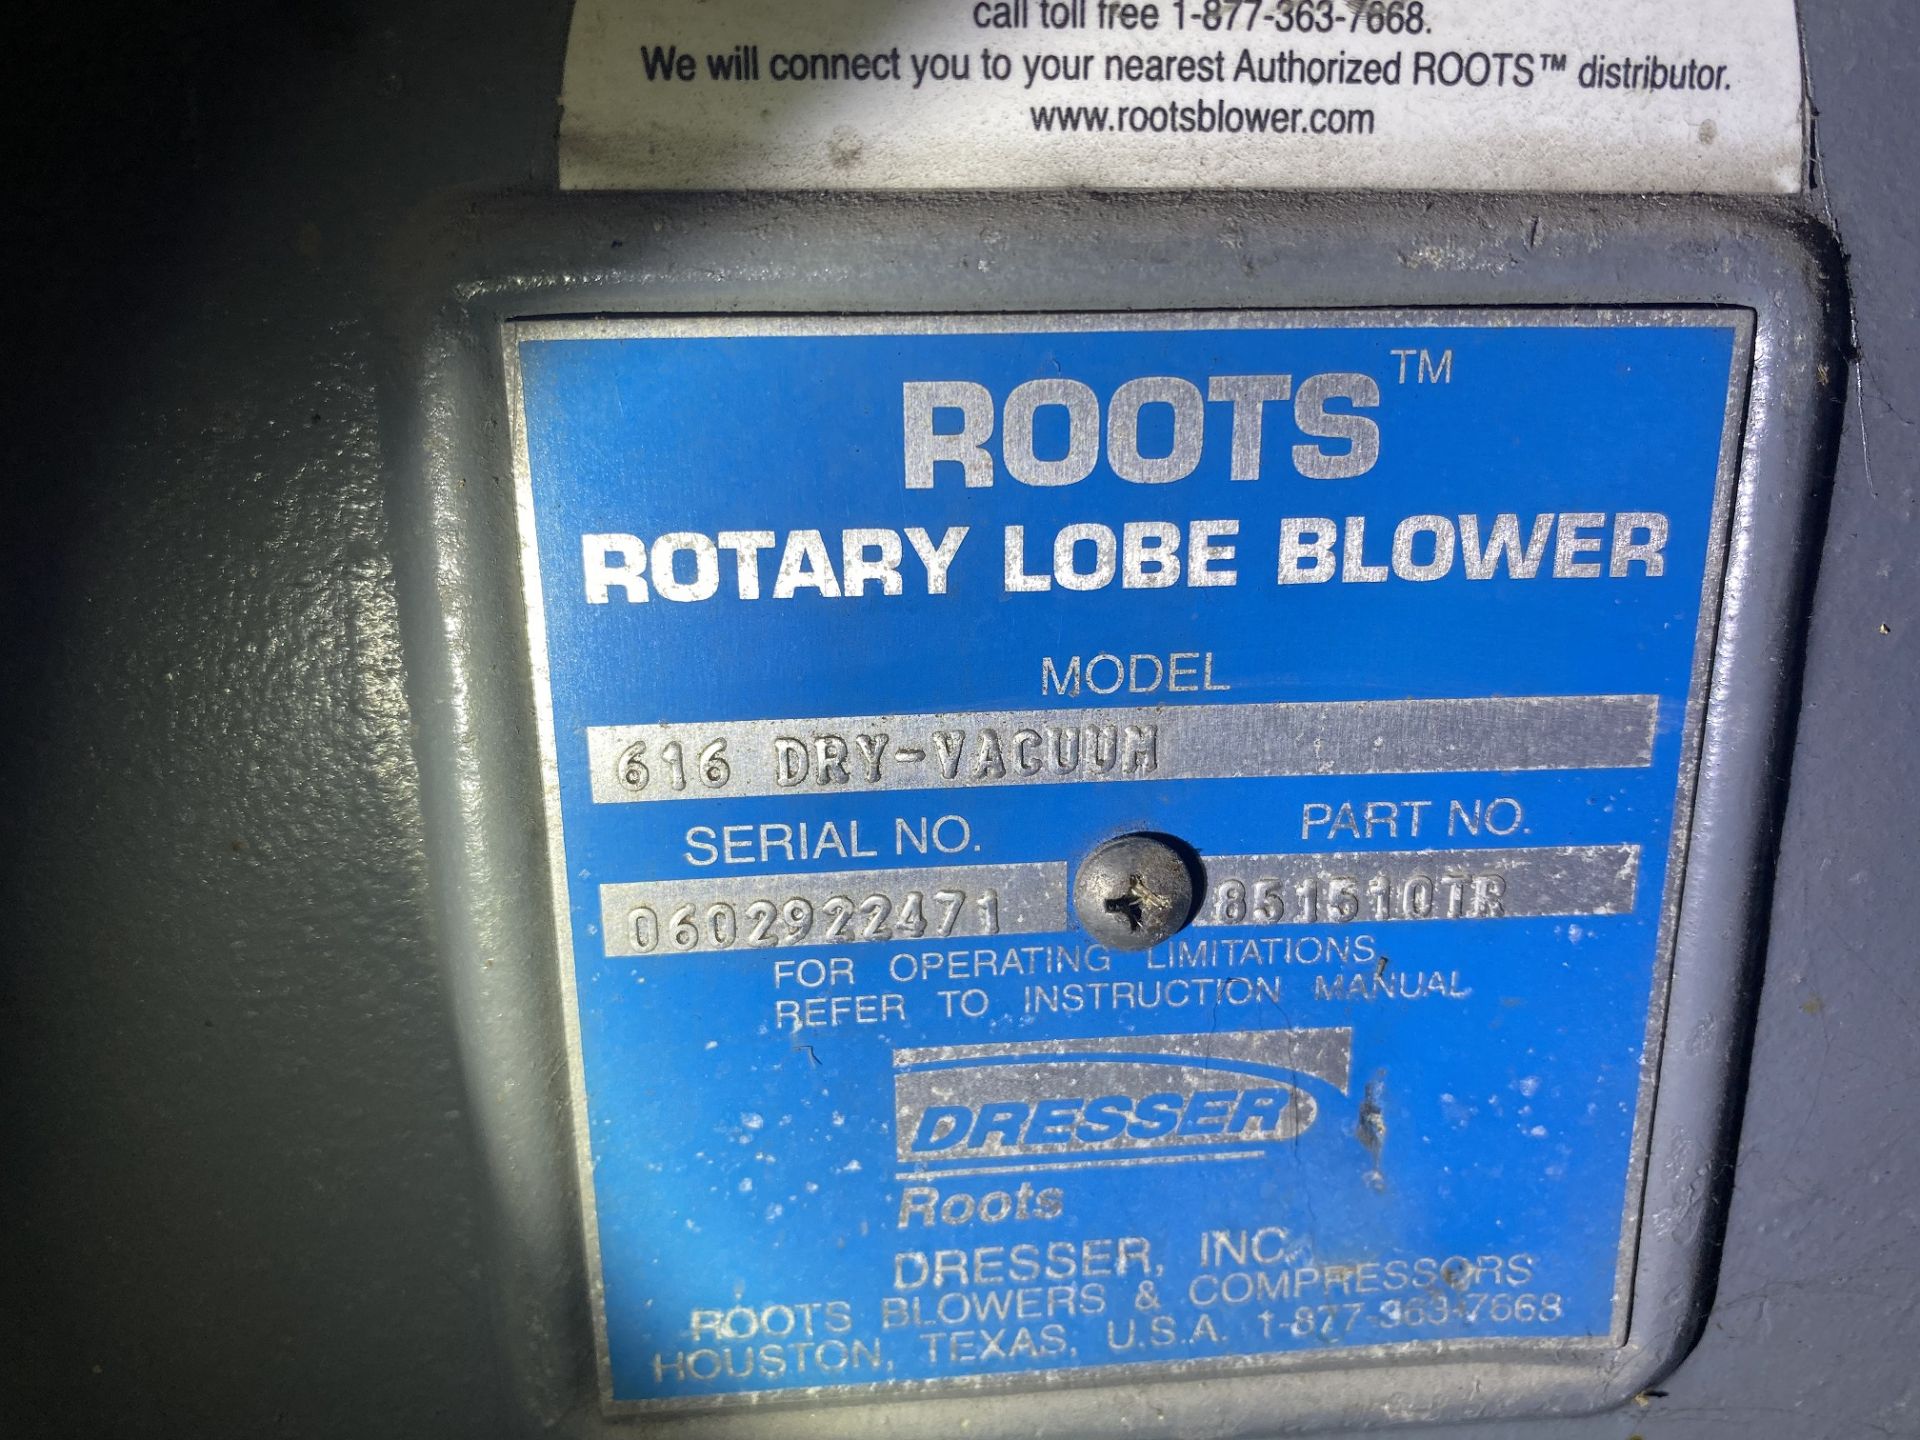 Dresser Roots 616 Dry-Vacuum Rotary Lobe Blower, Storeroom Spare